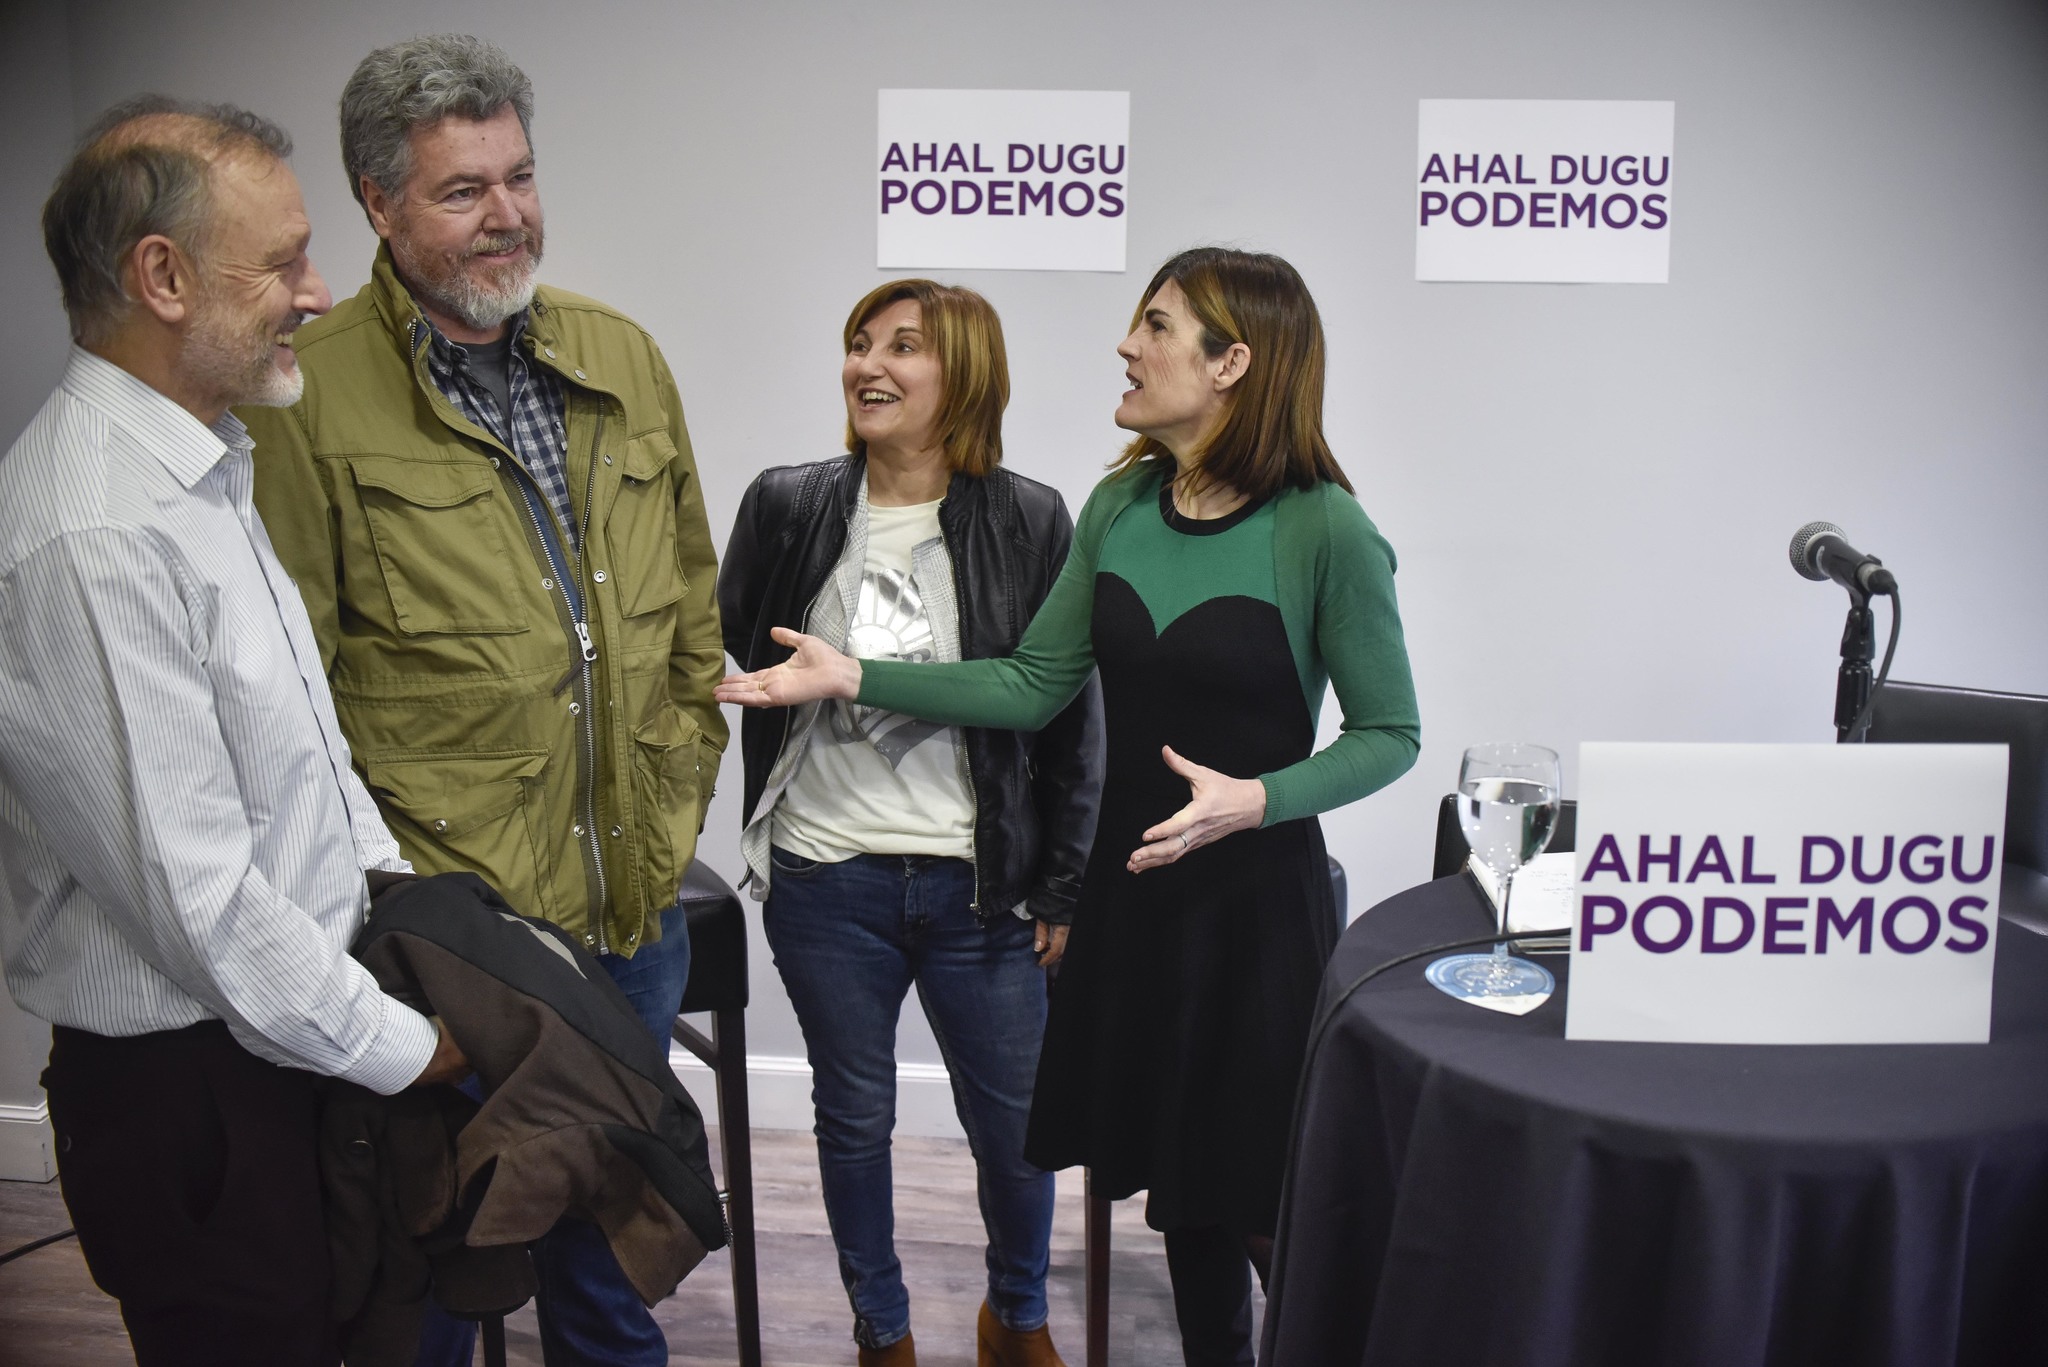 Roberto Uriarte, Lpez de Uralde, Pilar Garrido y Miren Gorrotxategi charlan en la sede de Podemos en Bilbao.